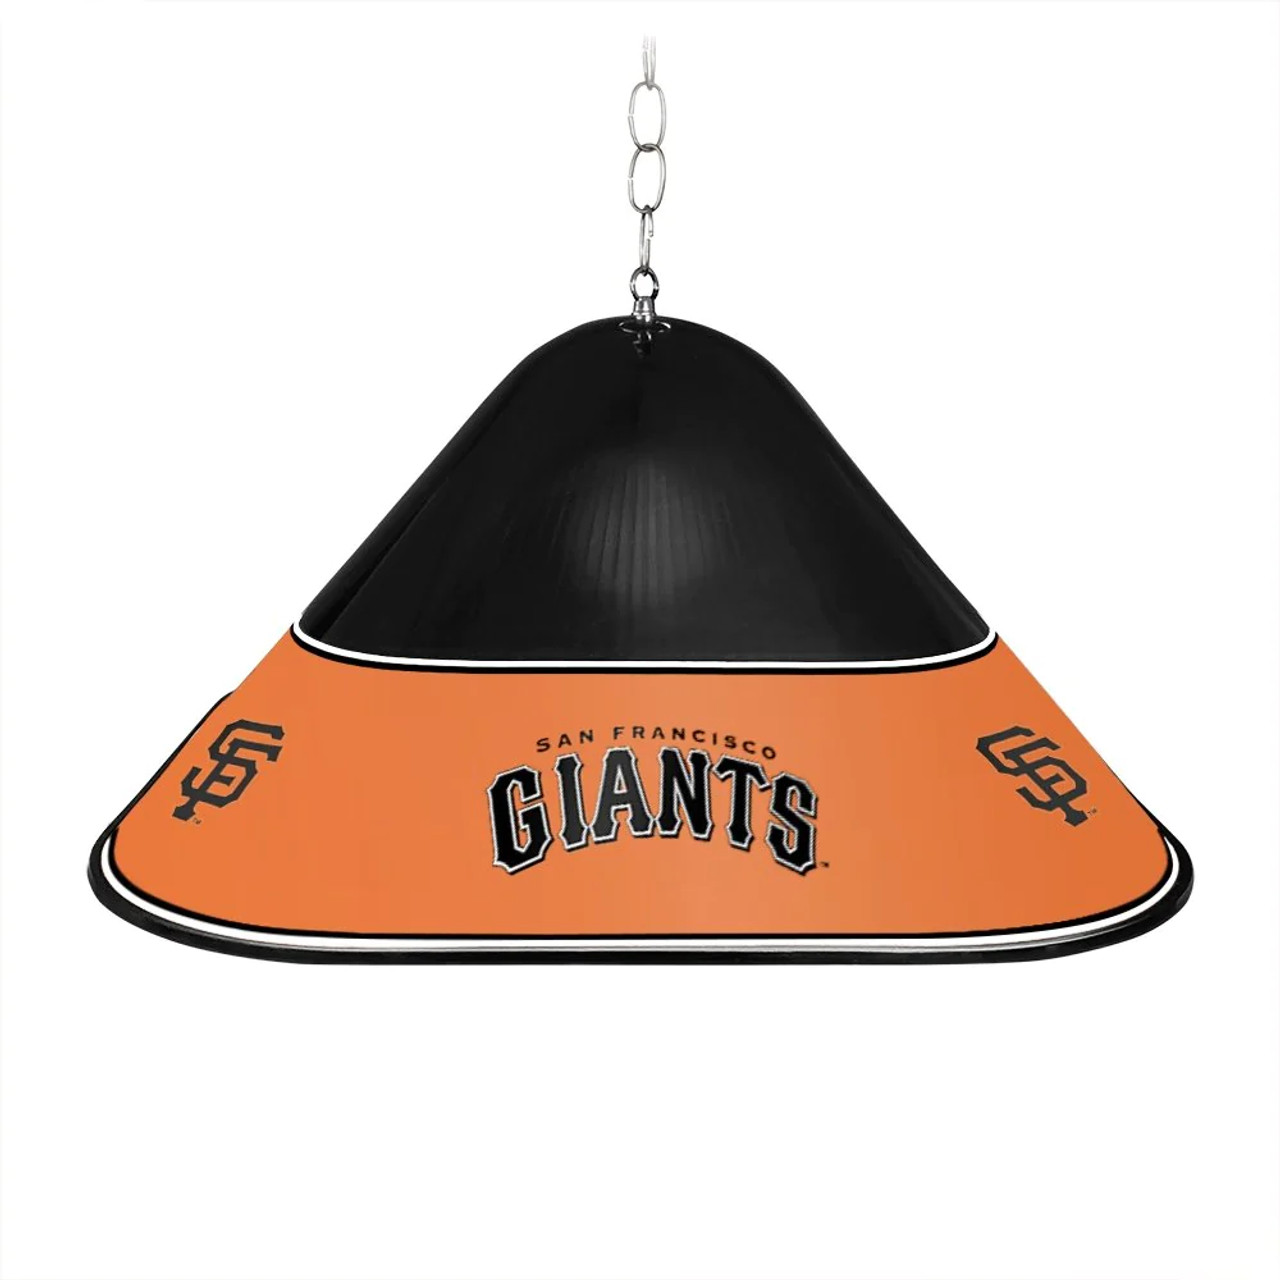 San Francisco Giants: Game Table Light